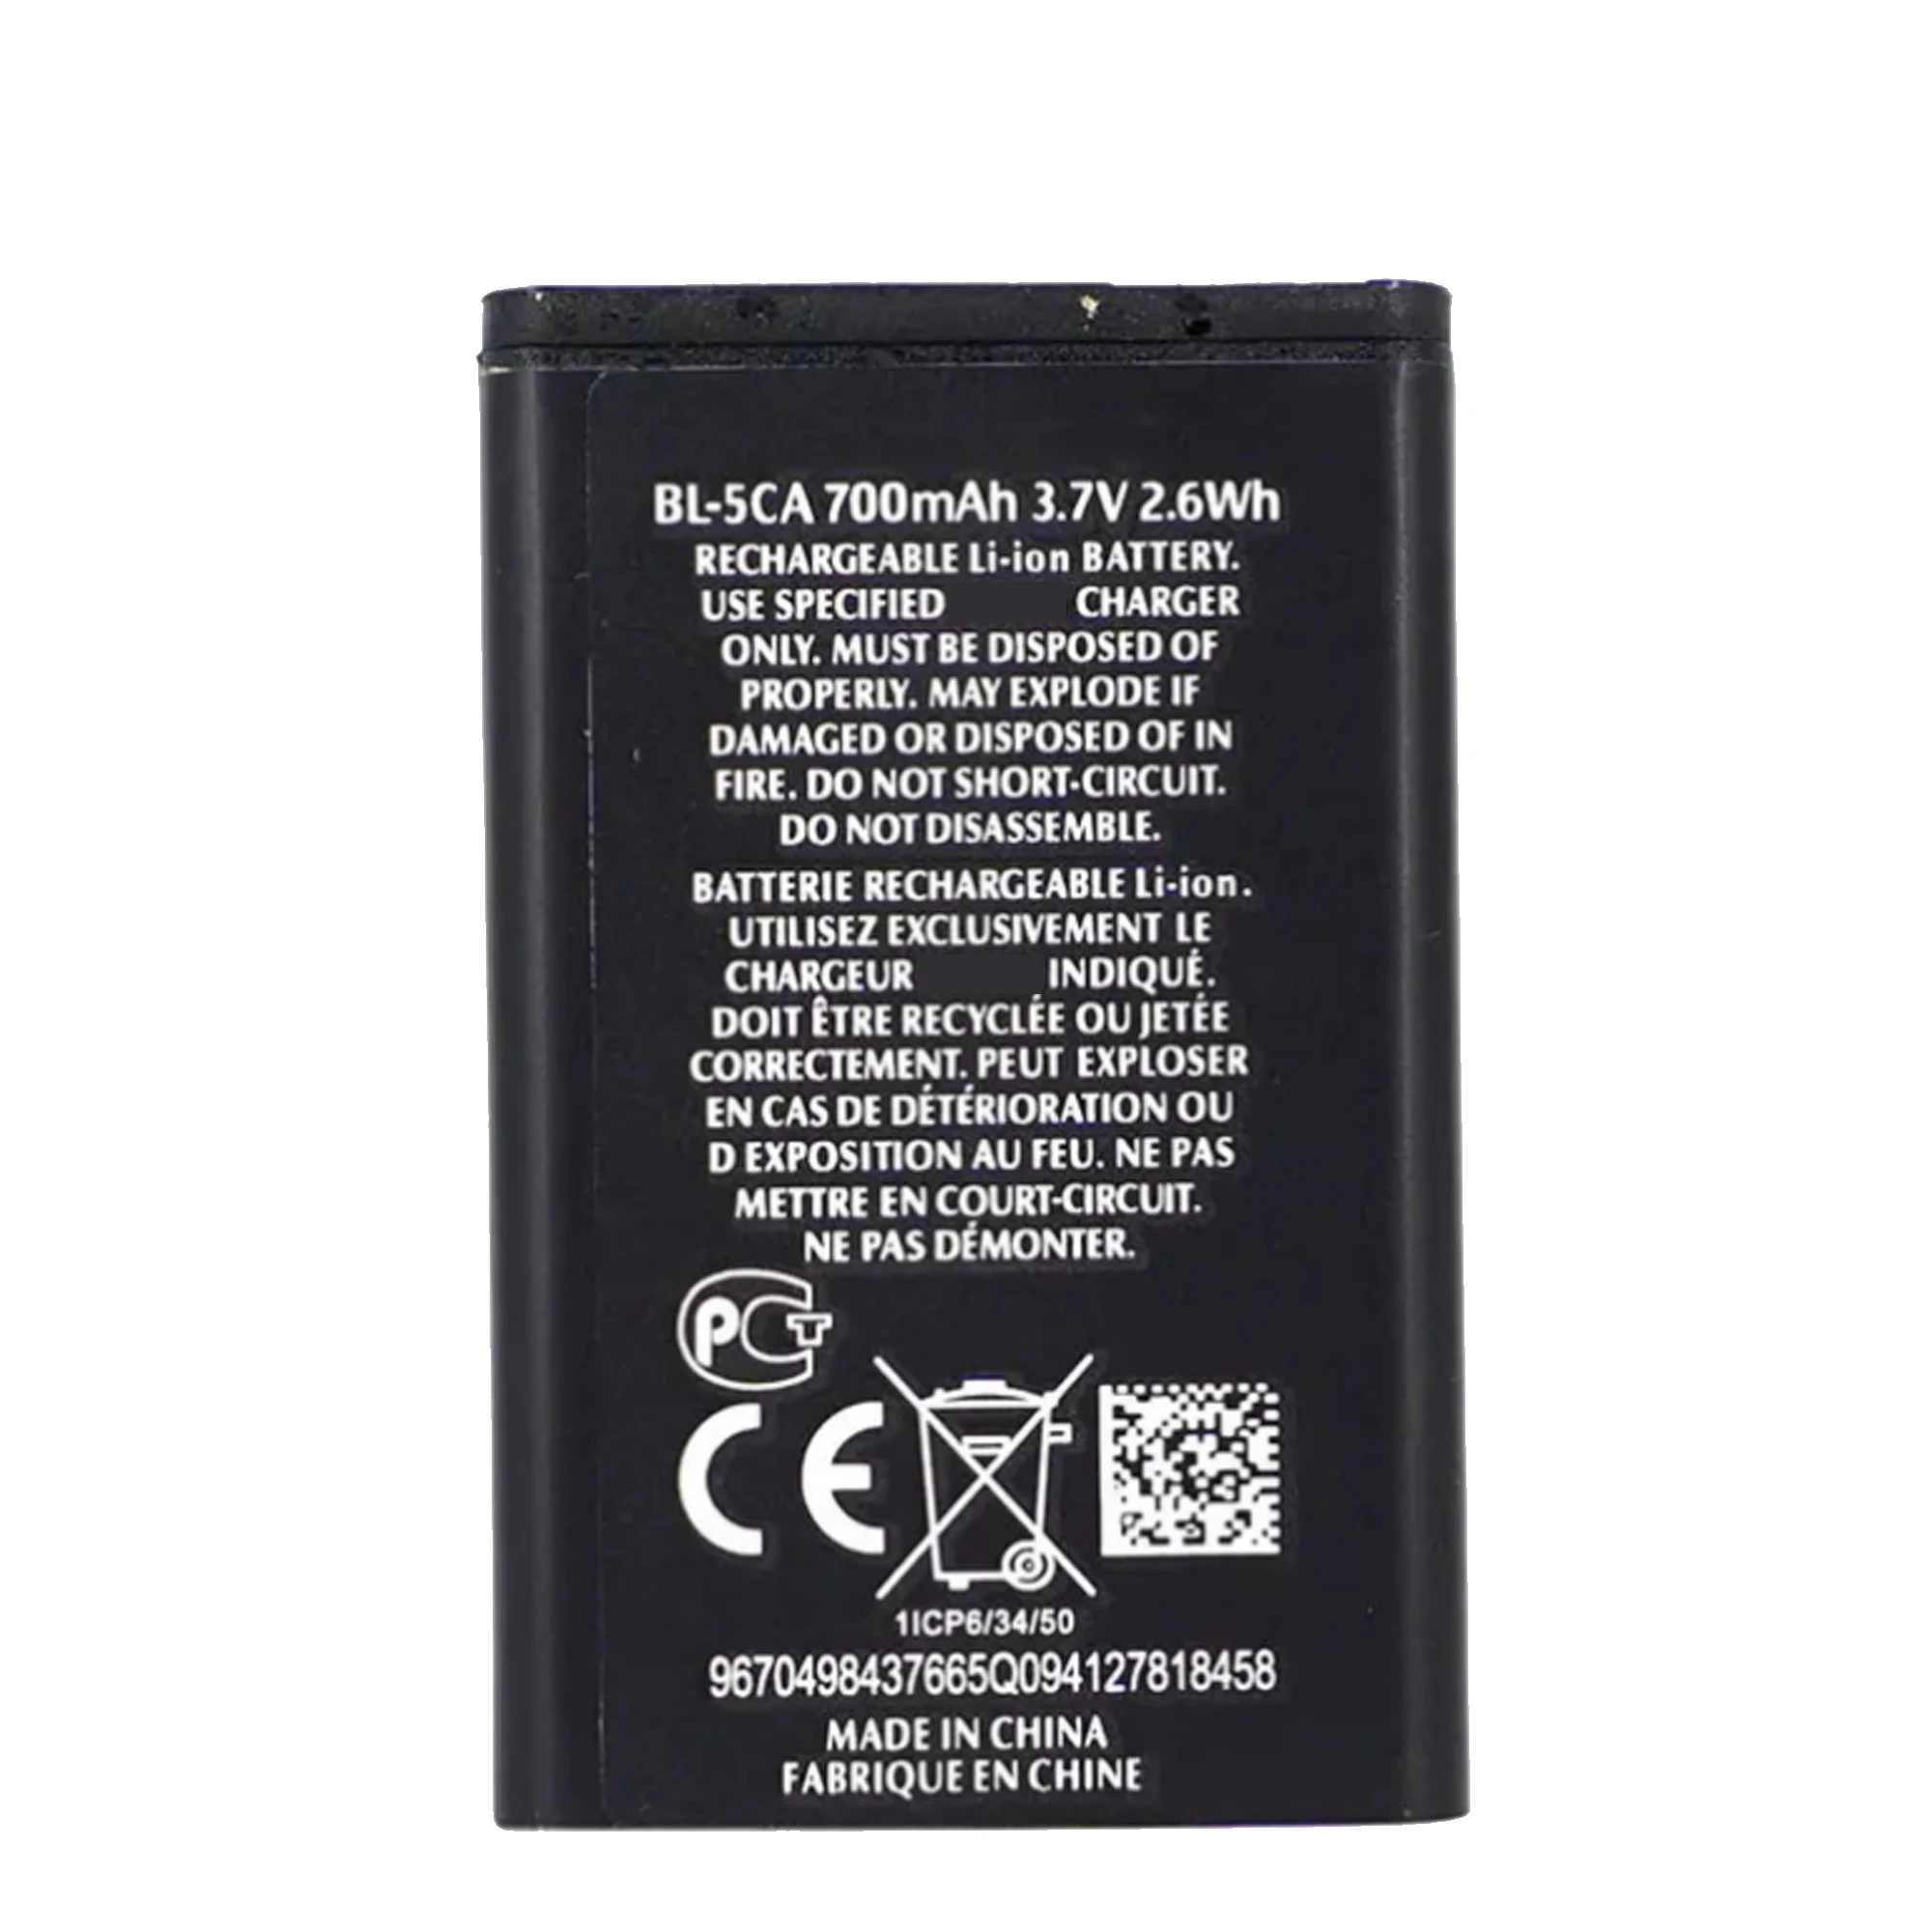 BL-5CA BL5CA Battery For Nokia 1110 1111 1112 1200 2310 5130XM 7600 N70 E60 5030 C2-00 C2-01 Original Capacity Phone Batteries B enlarge